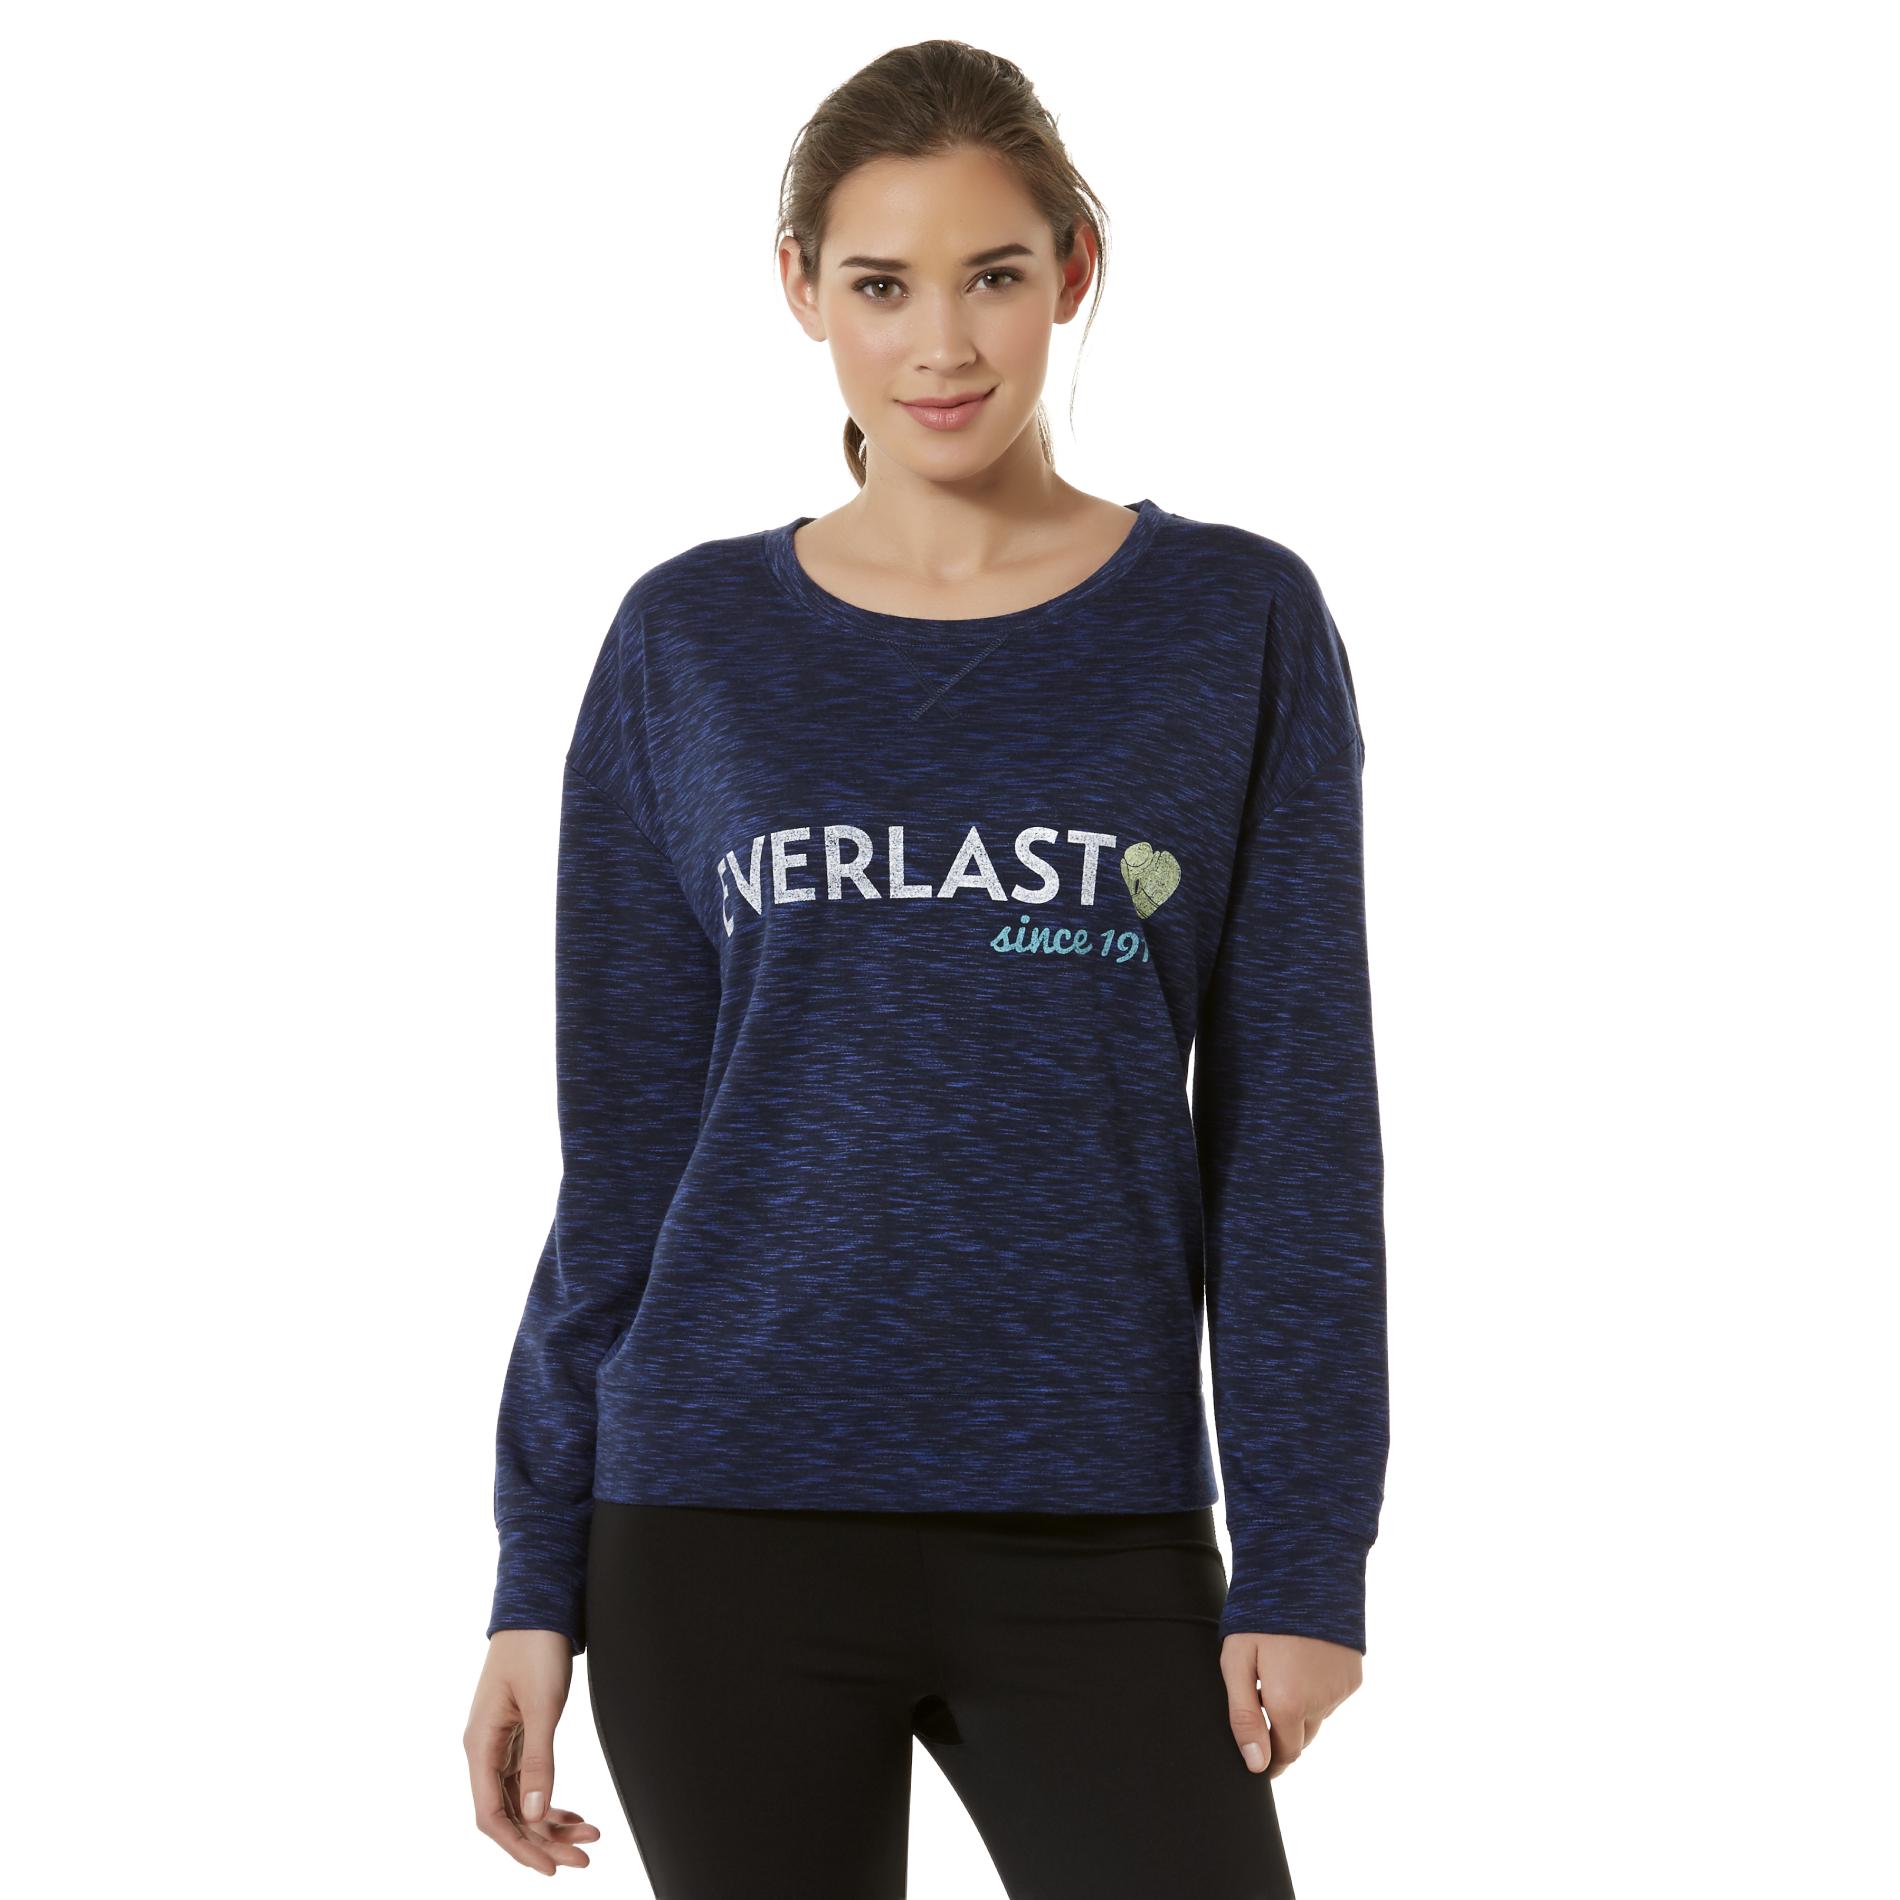 Everlast&reg; Women's Graphic Athletic Sweatshirt